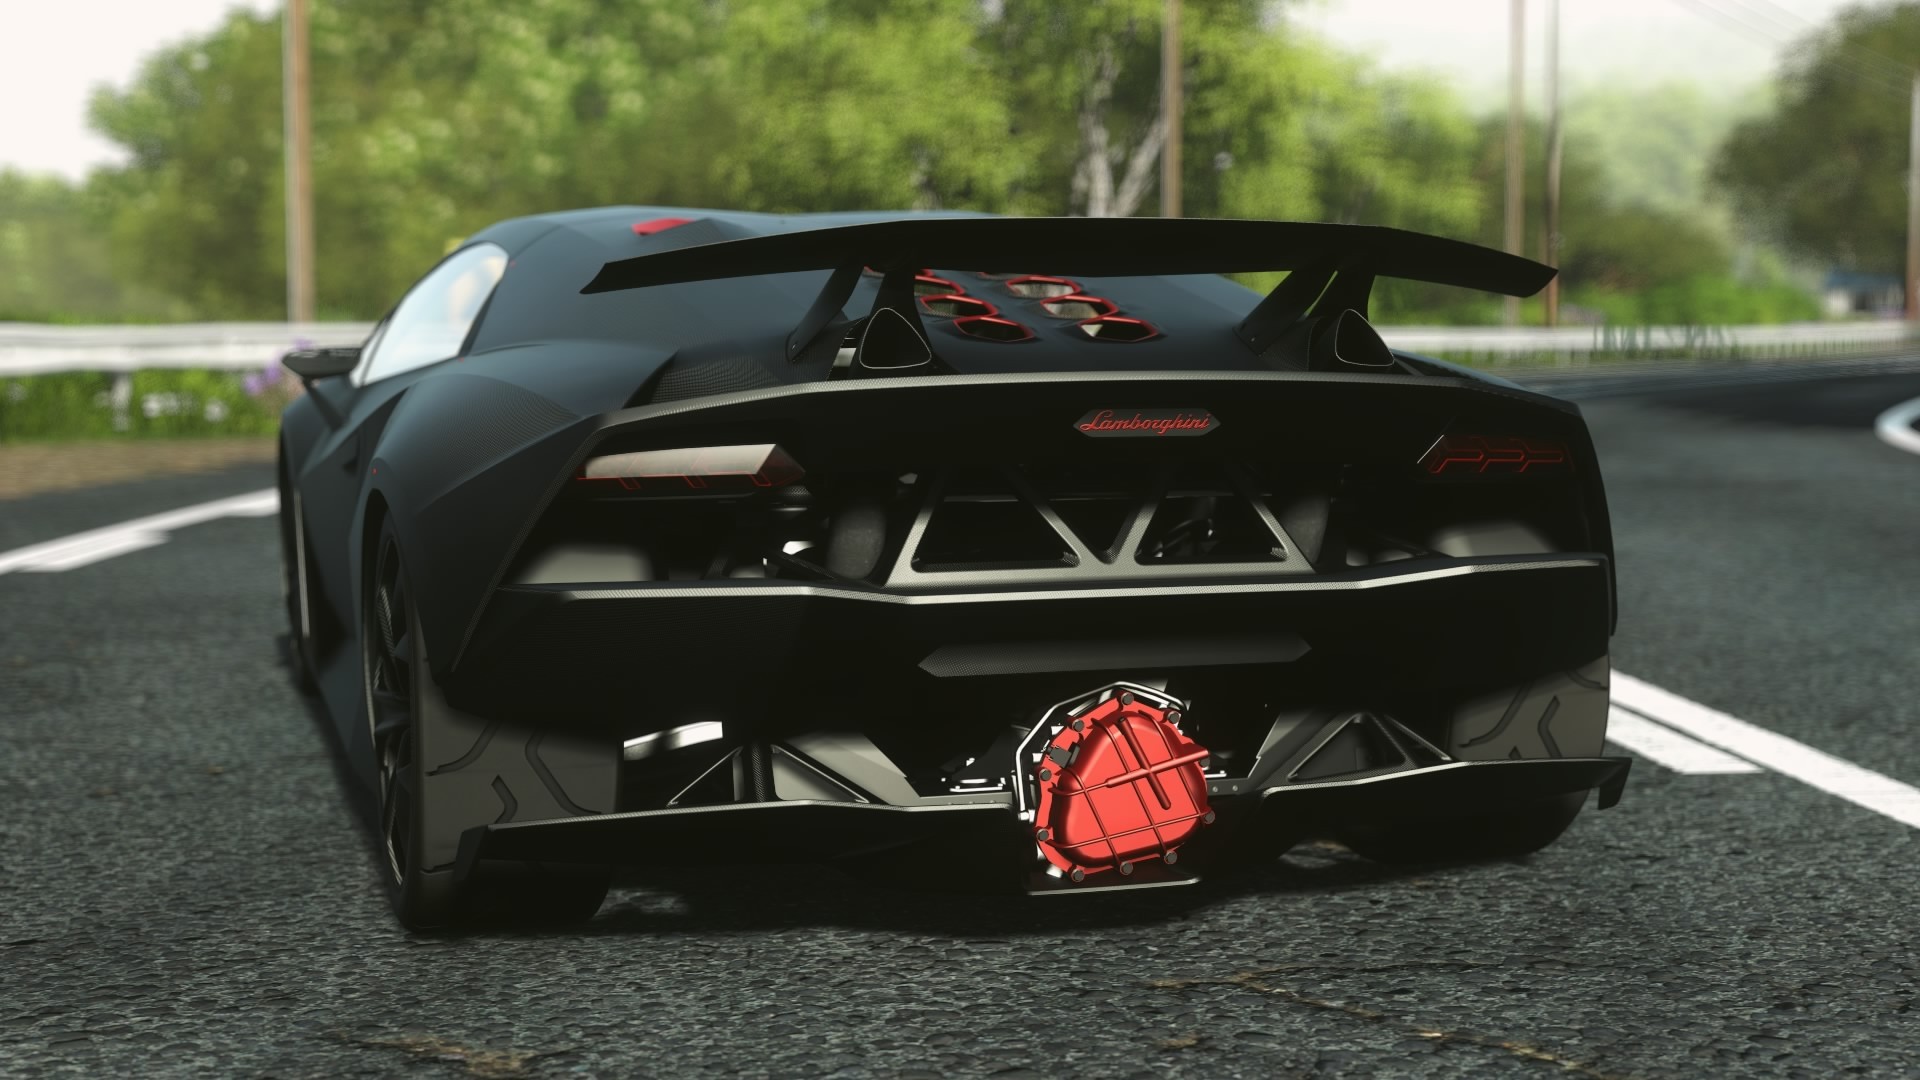 General 1920x1080 Driveclub car racing black cars Lamborghini supercars vehicle video games Lamborghini Sesto Elemento